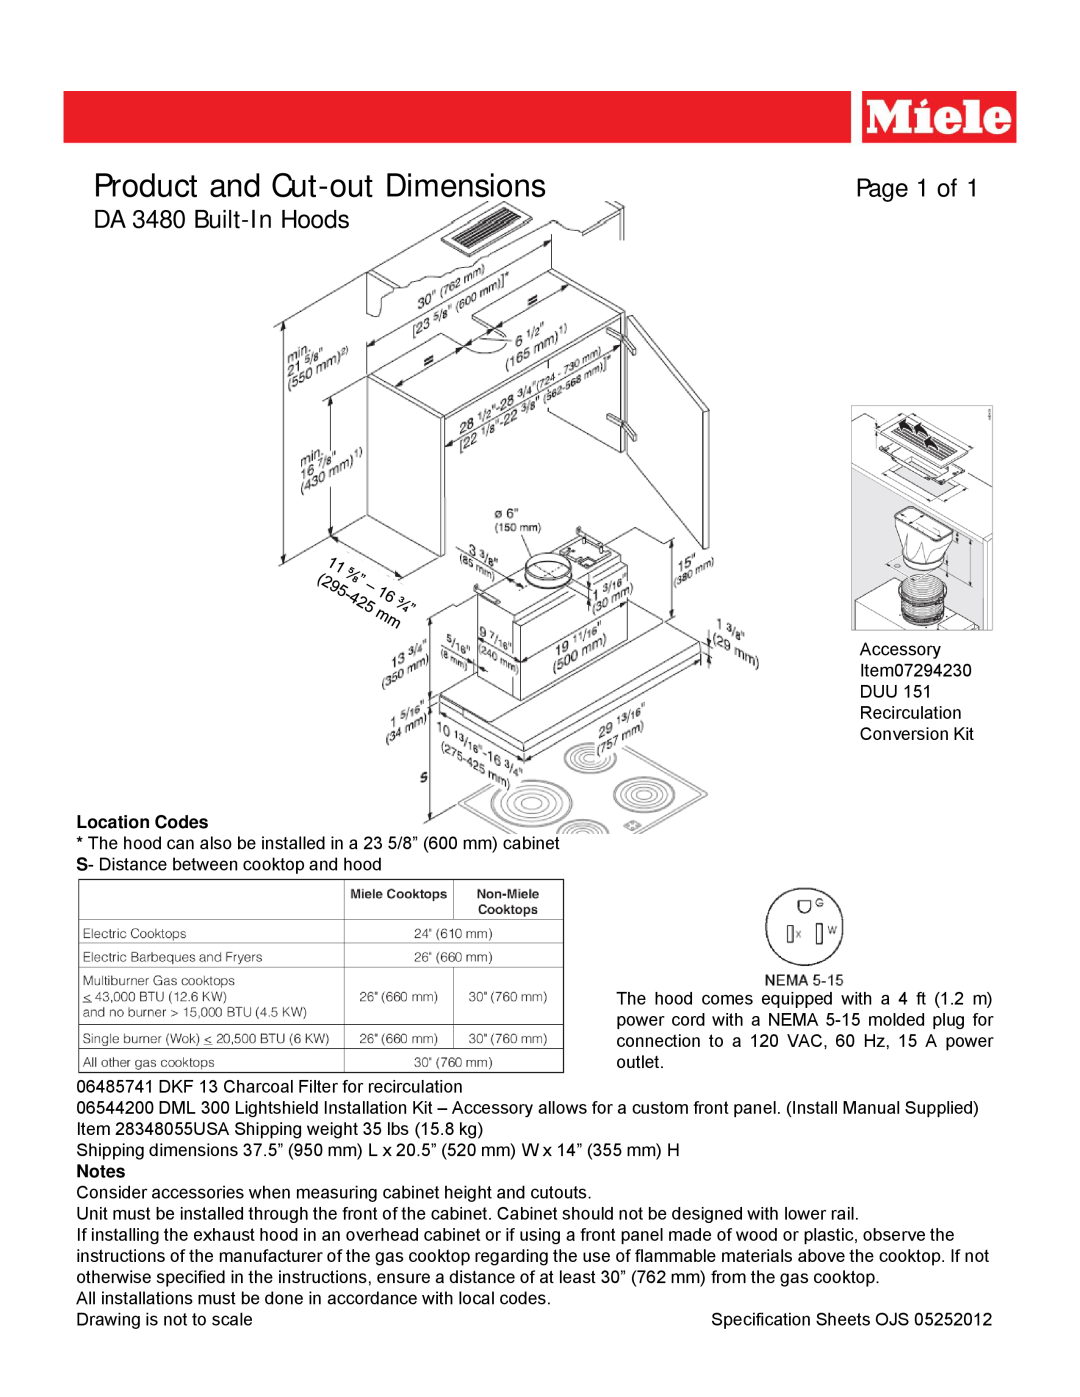 Miele DA 3480 installation instructions Operating and Installation Instructions, Ventilation System DA DA DA, en - US, CA 